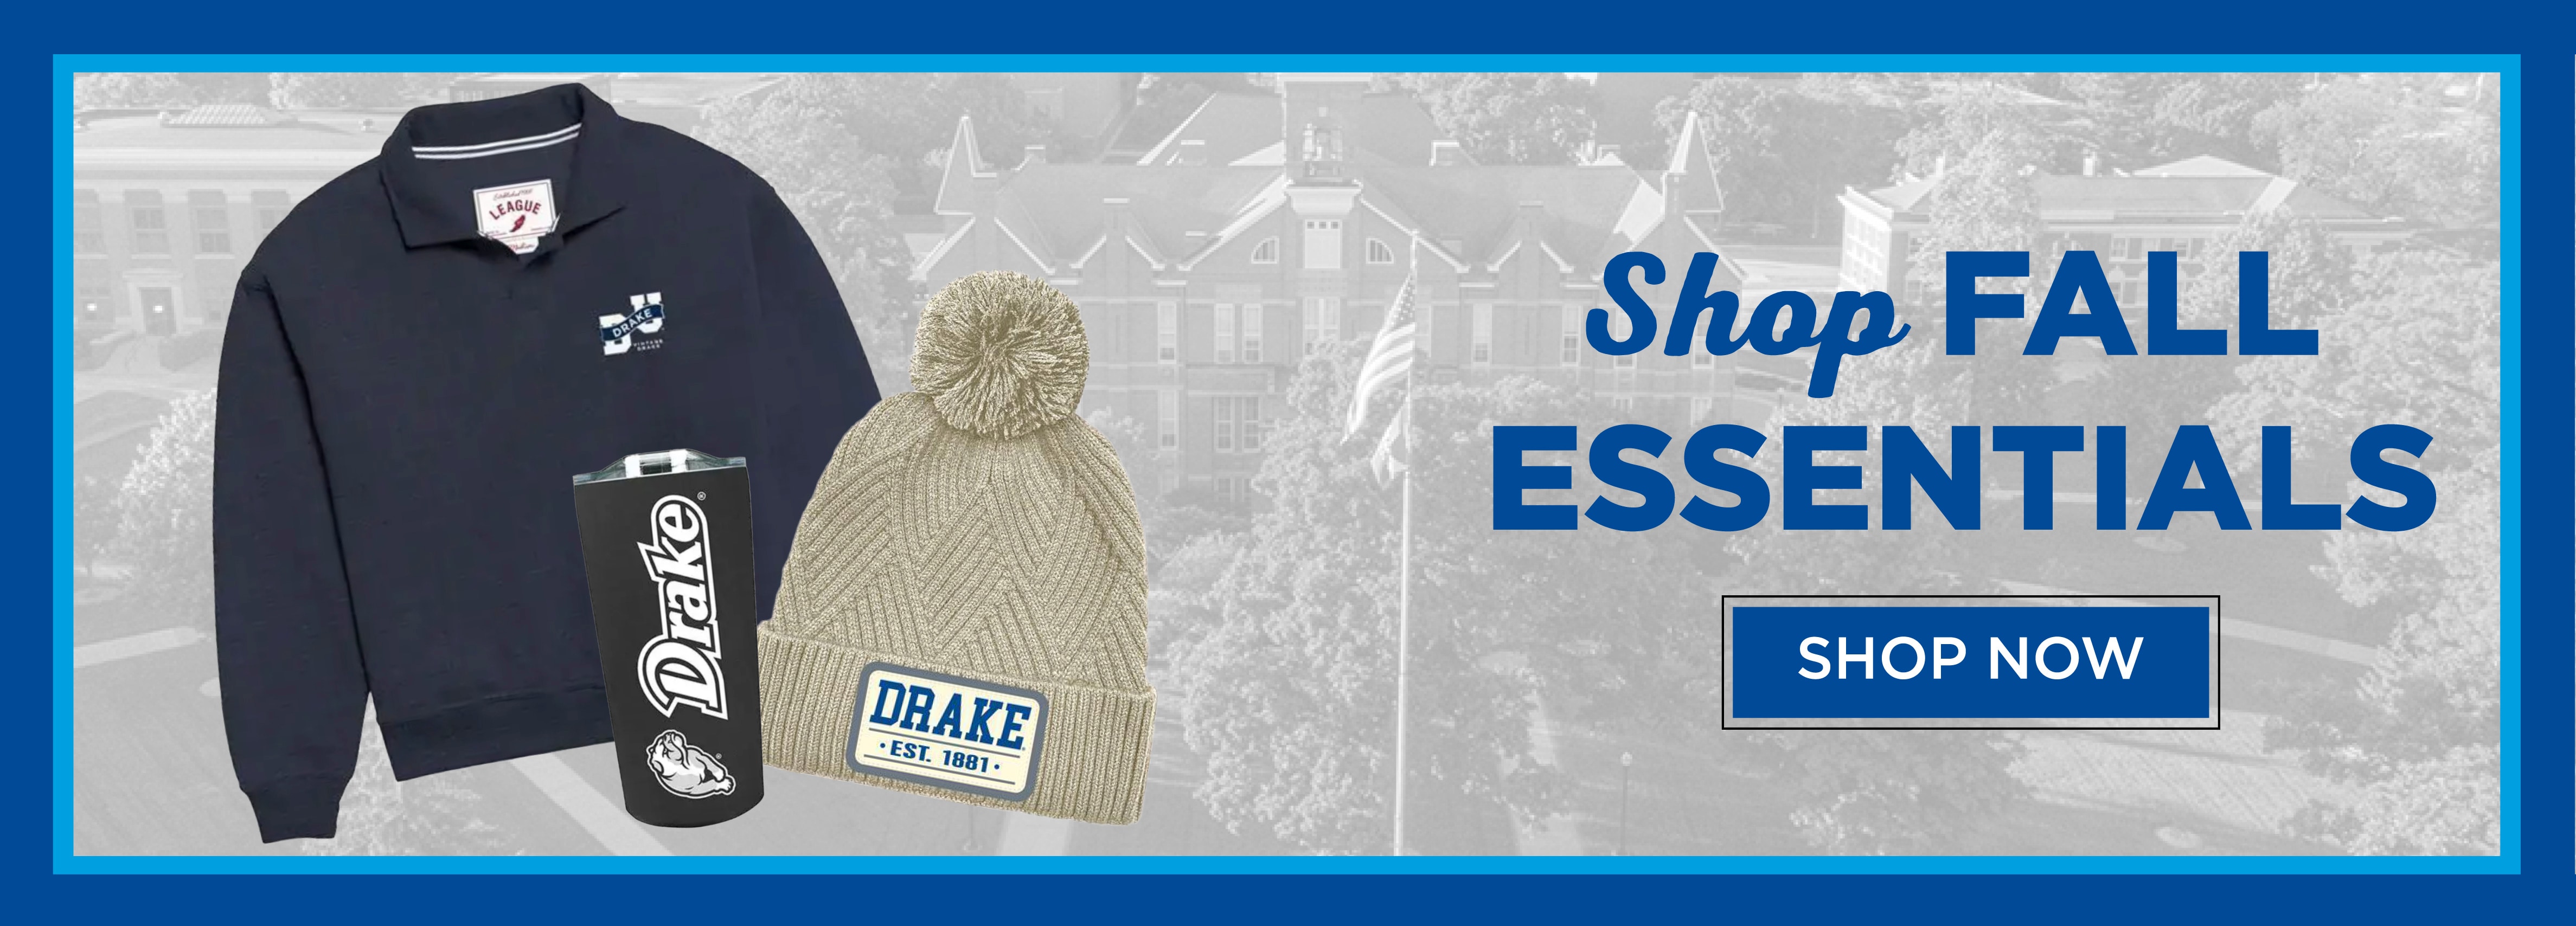 Shop Fall Essentials Shop Now Image of Navy Sweatshirt, Drake Black Cup, Tan Drake Knit Hat